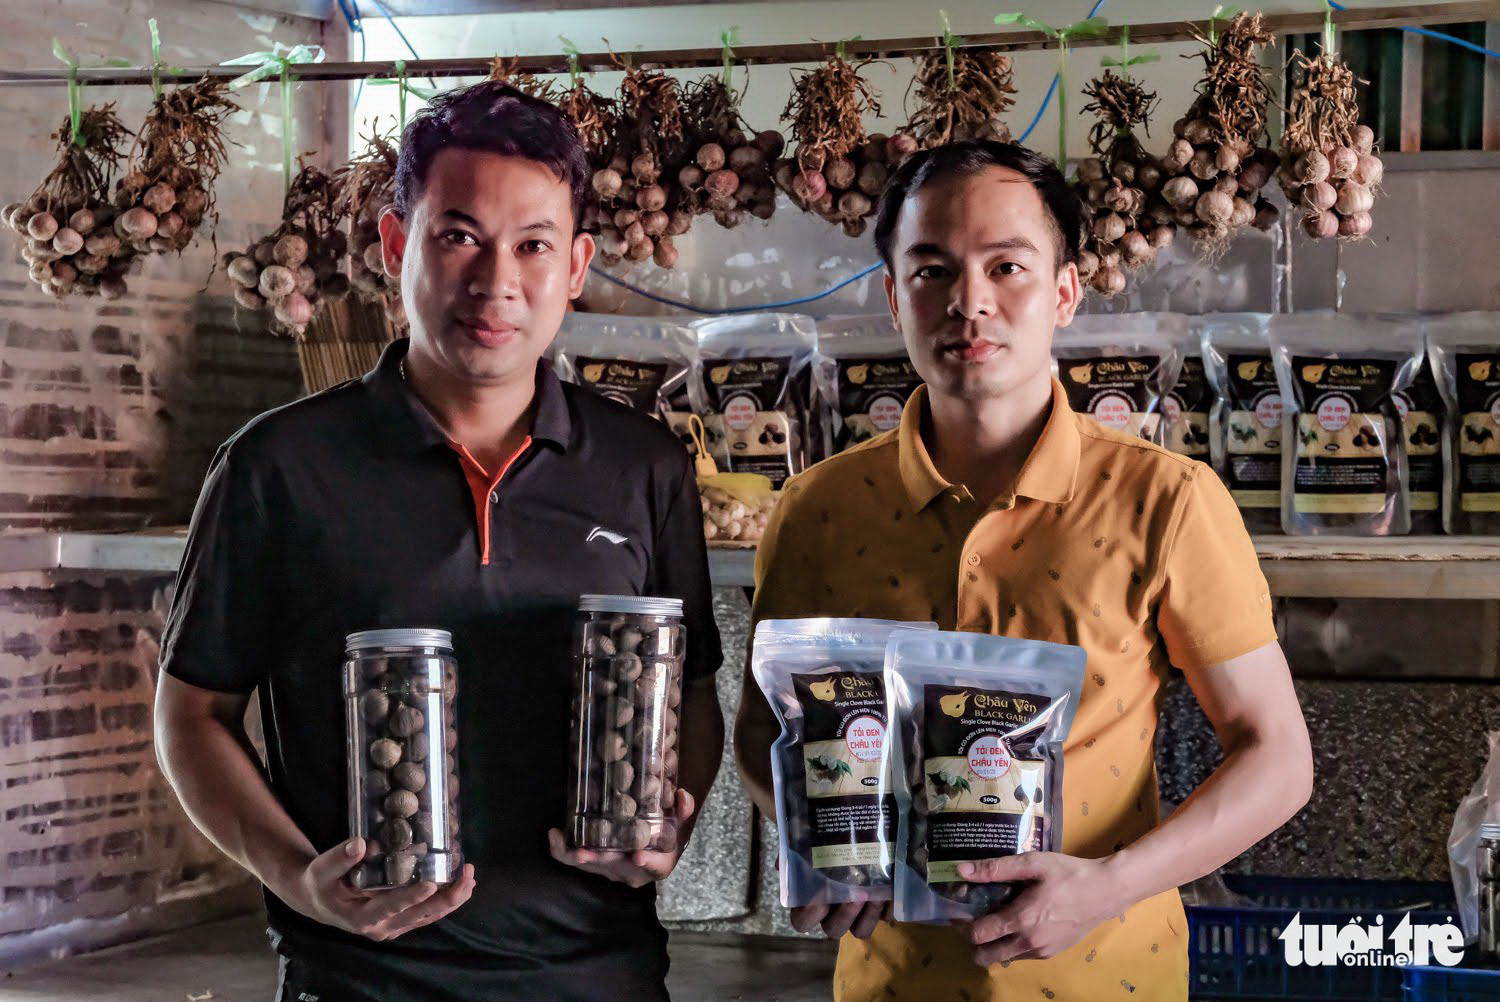 Vietnamese entrepreneurs rake in cash from locally-sourced black garlic